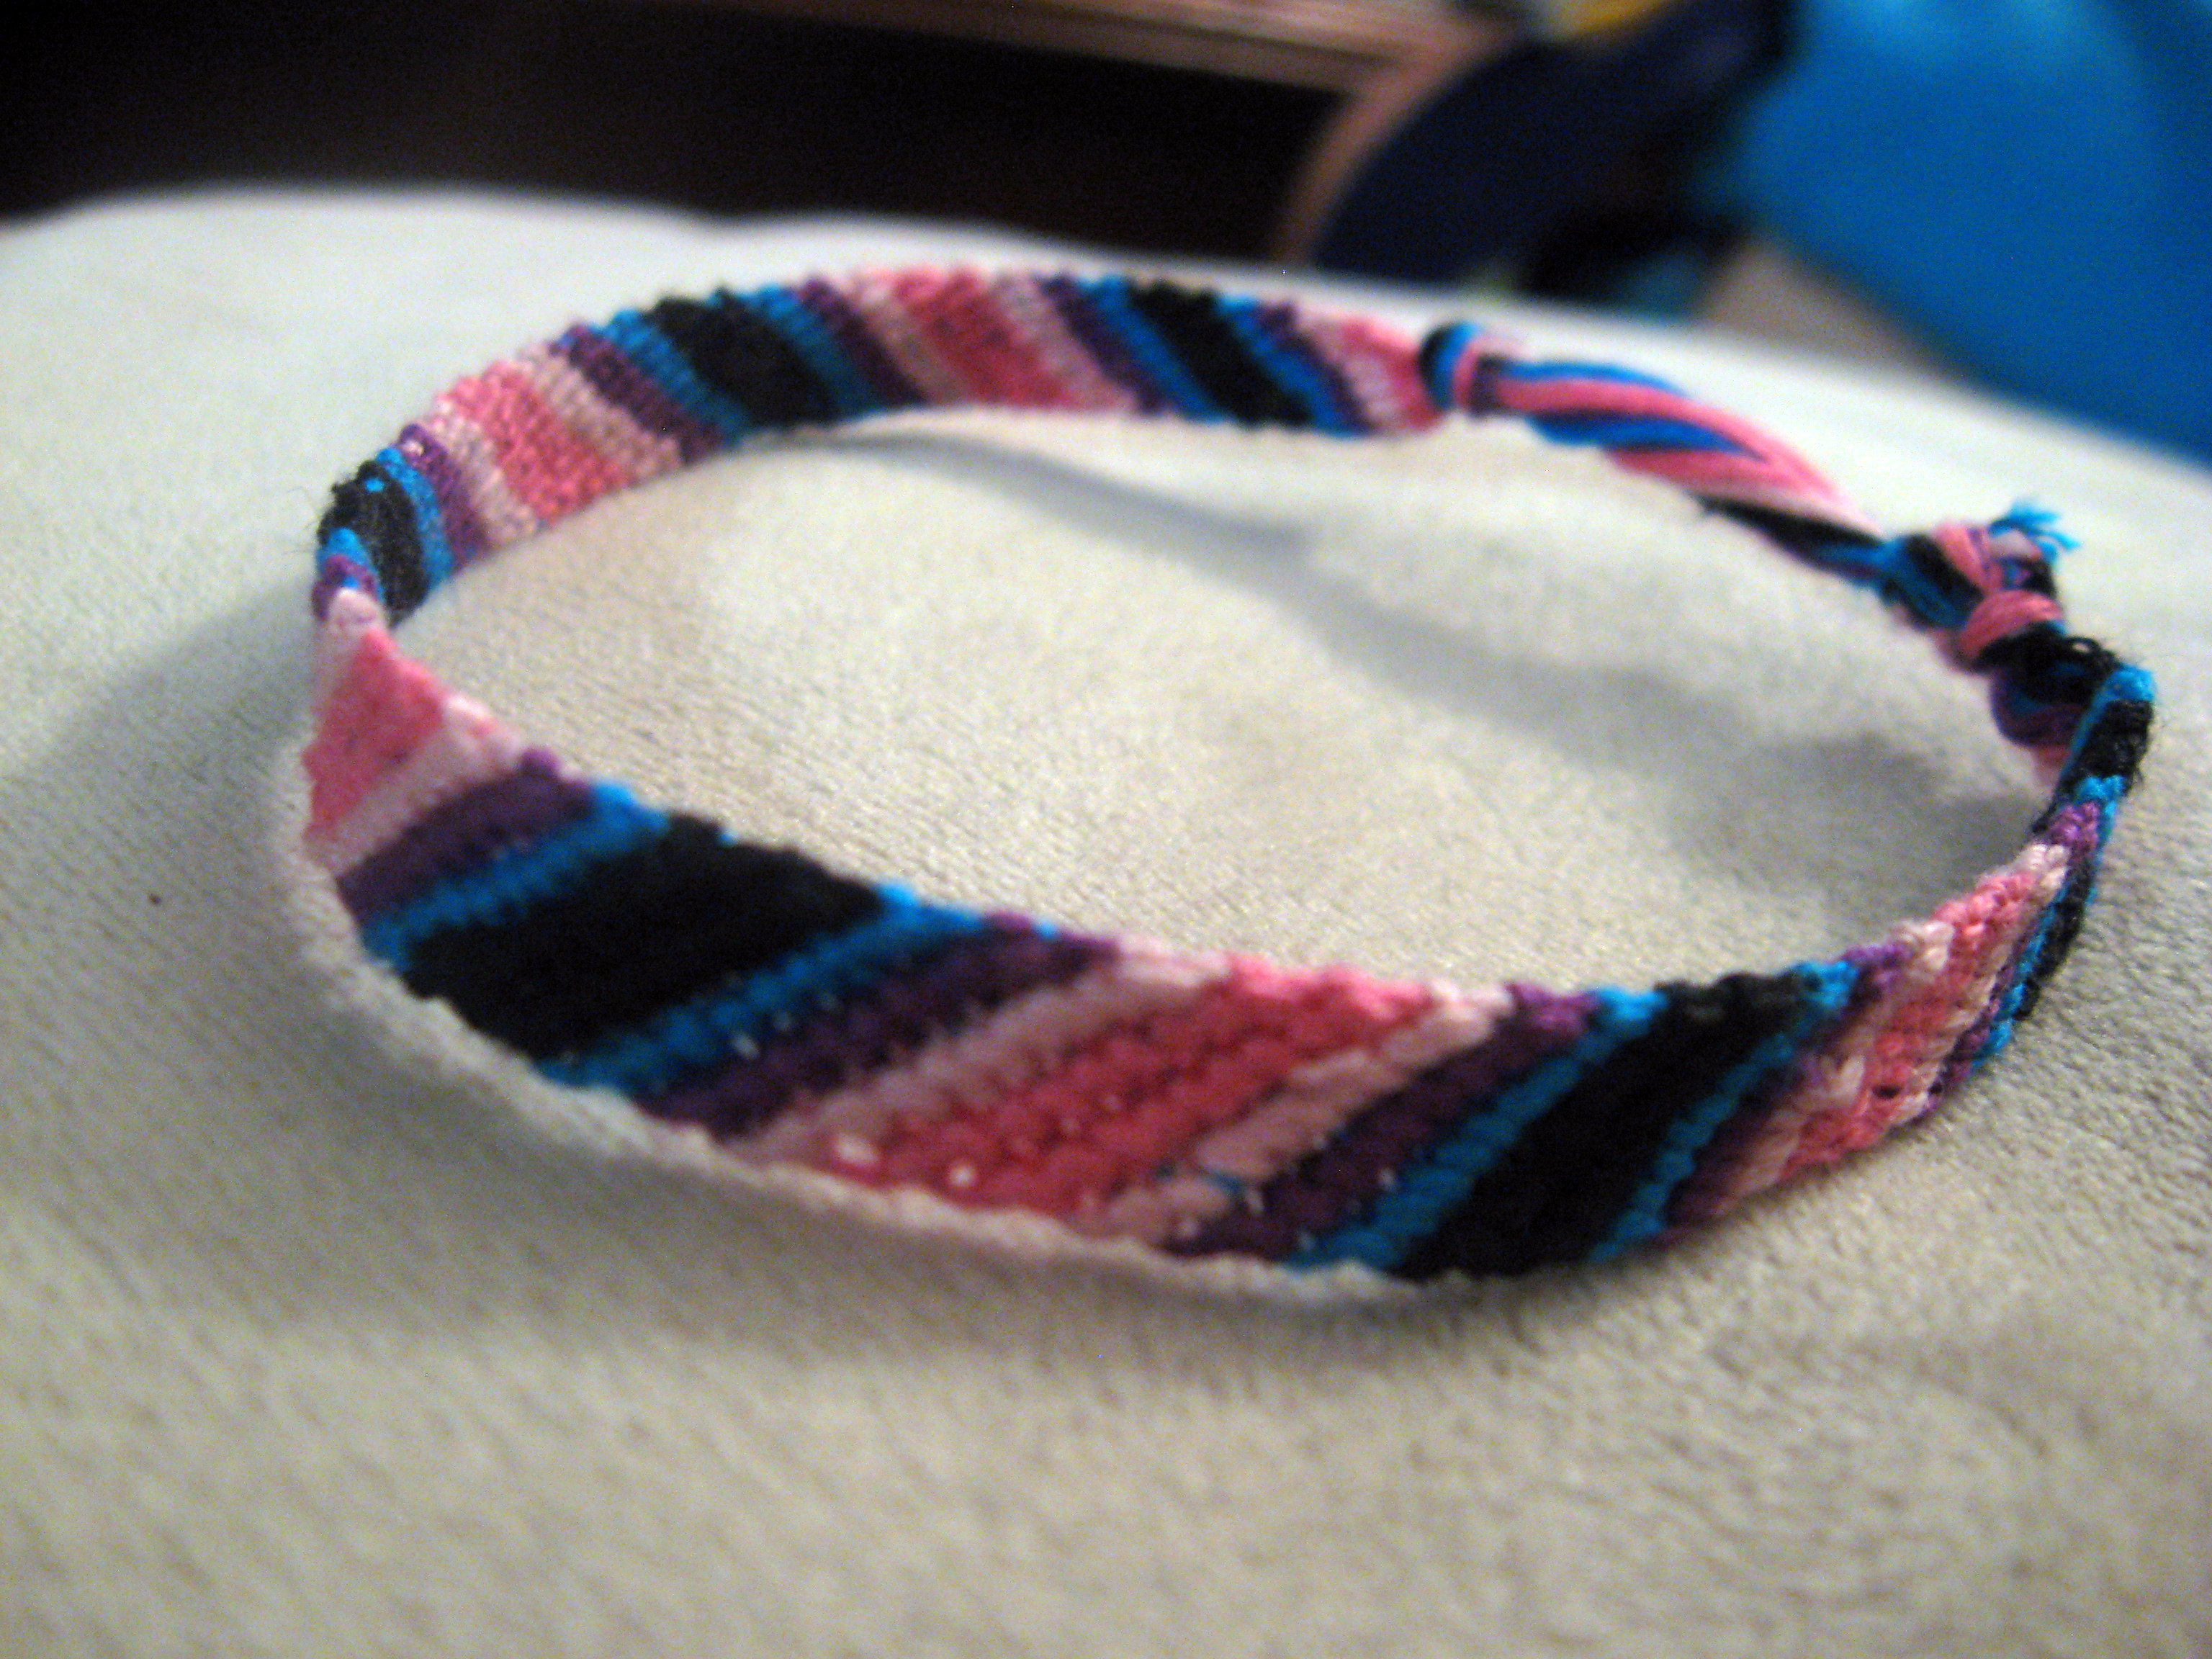 Best ideas about DIY Friendship Bracelets
. Save or Pin DIY Knotted Friendship Bracelet Now.